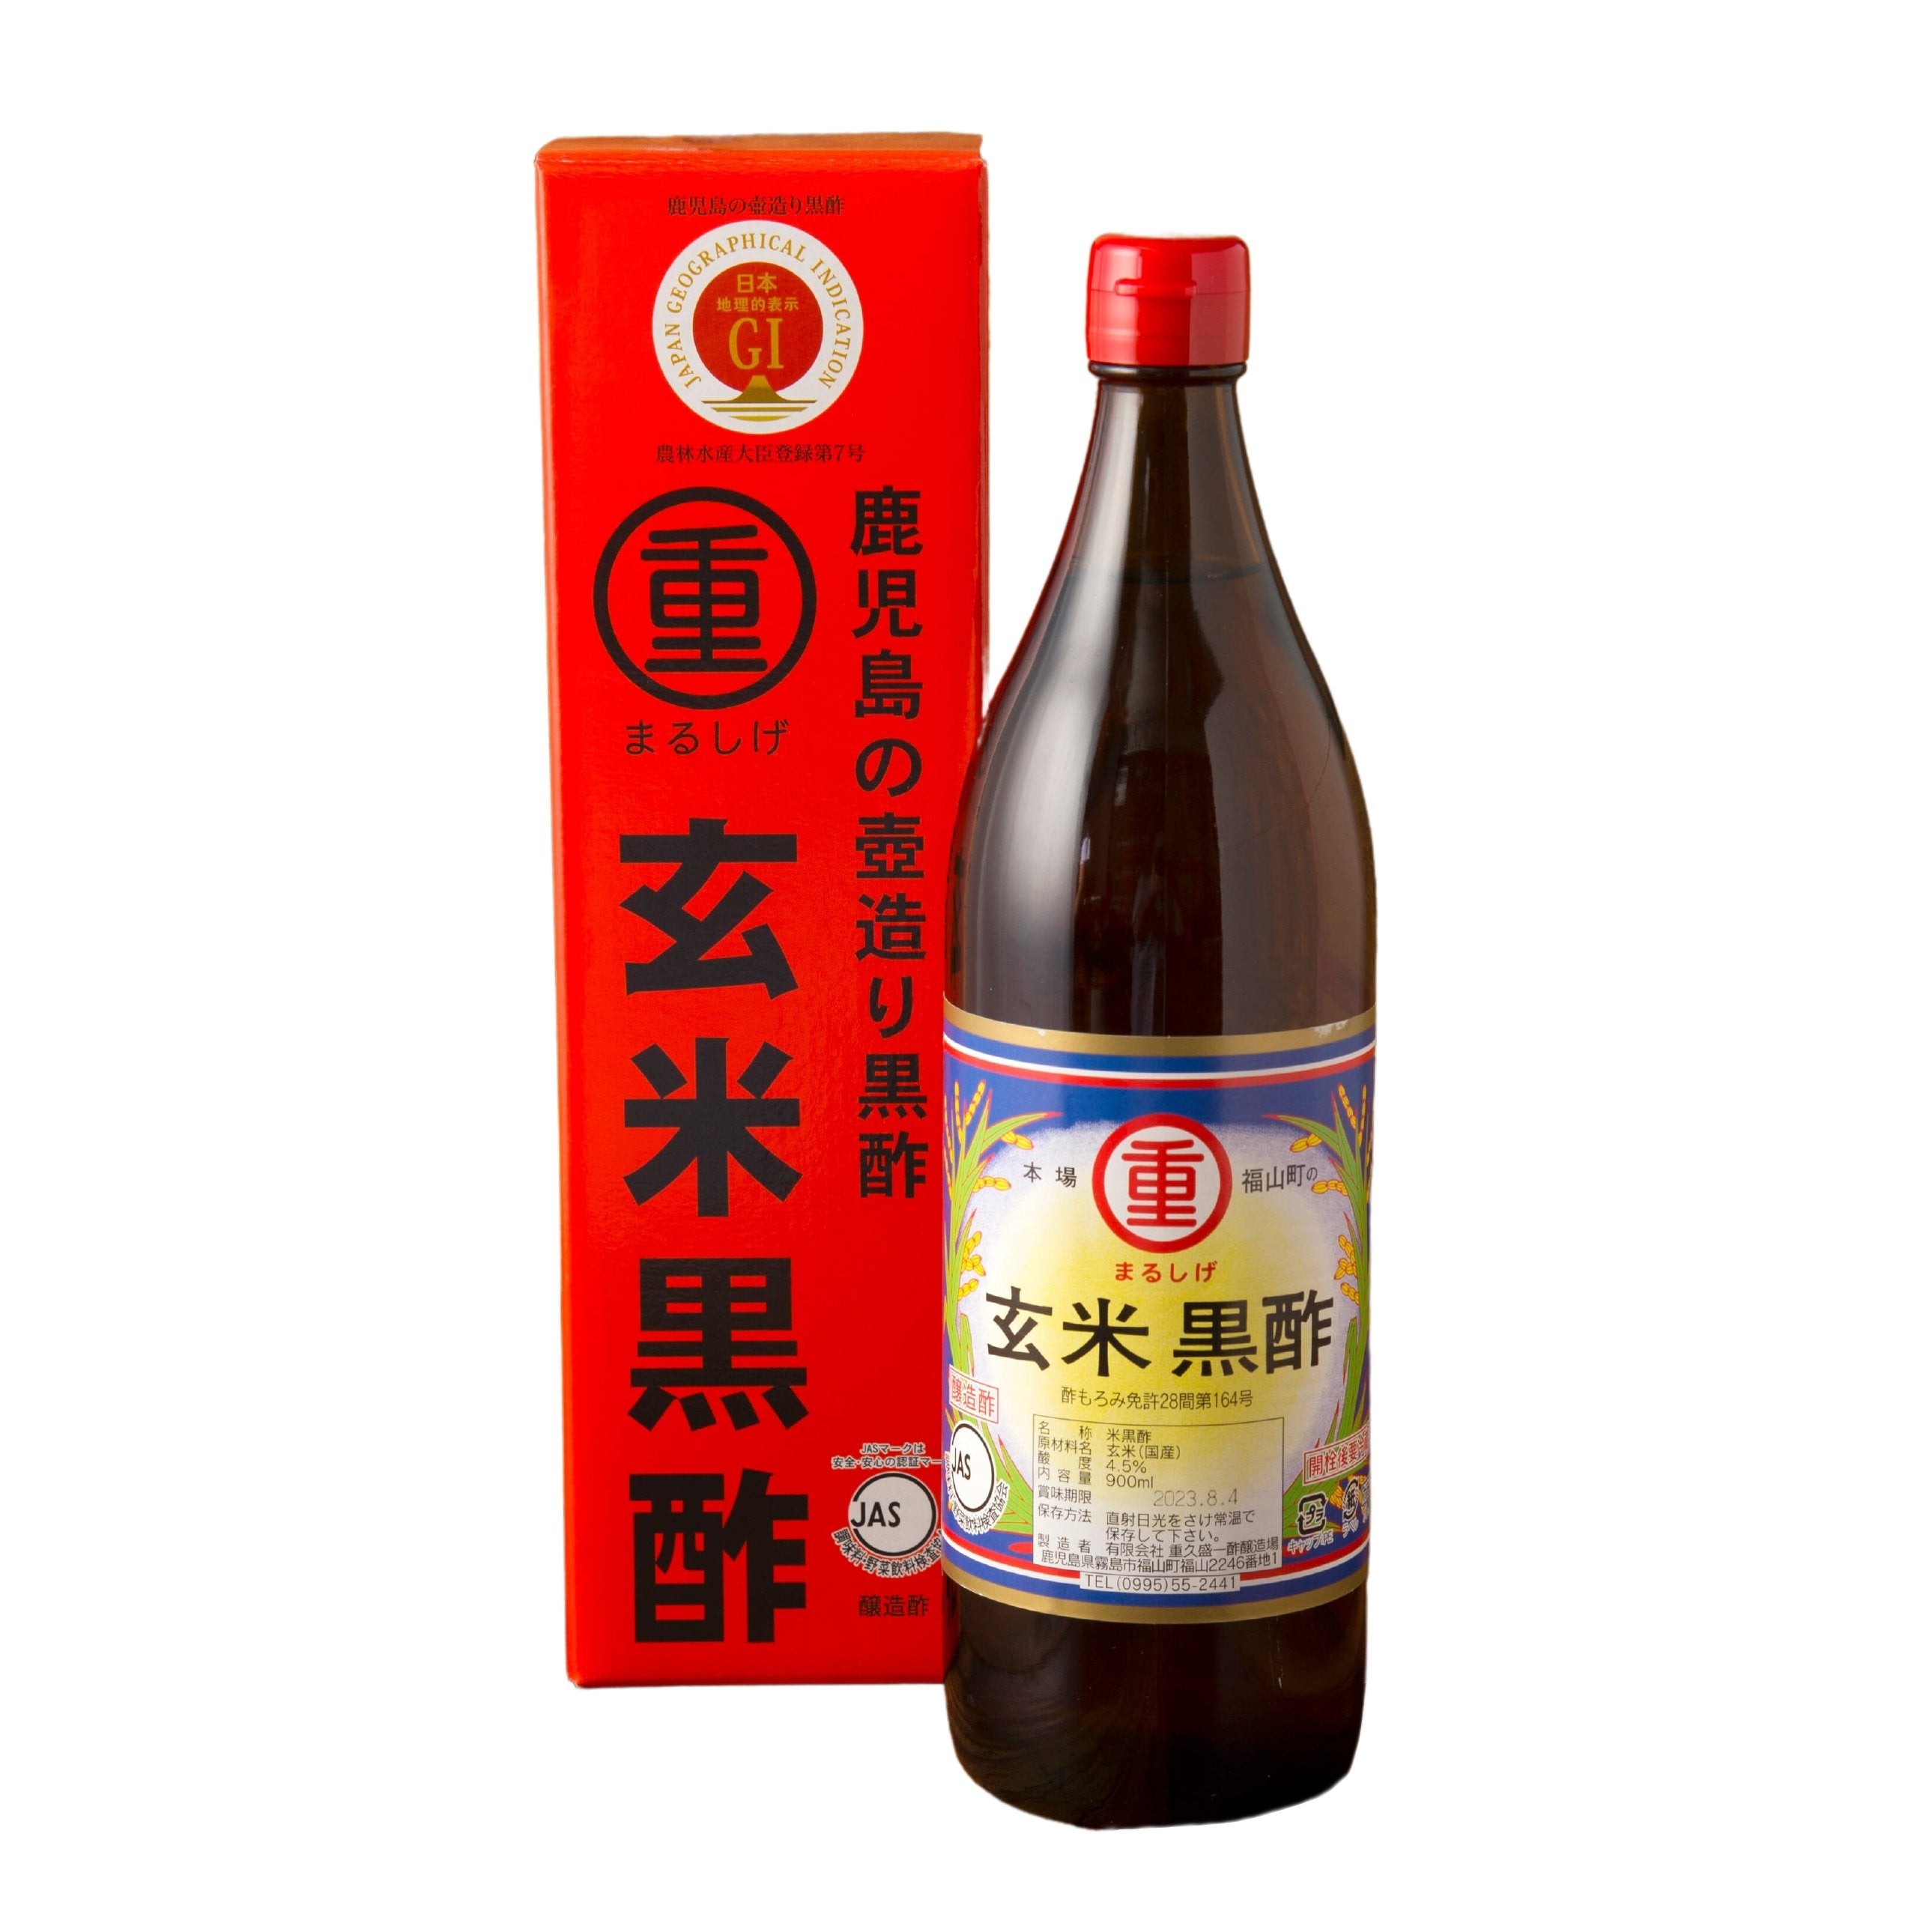 Marushige Naturally Fermented Black Vinegar 1 Year Aged 900ml